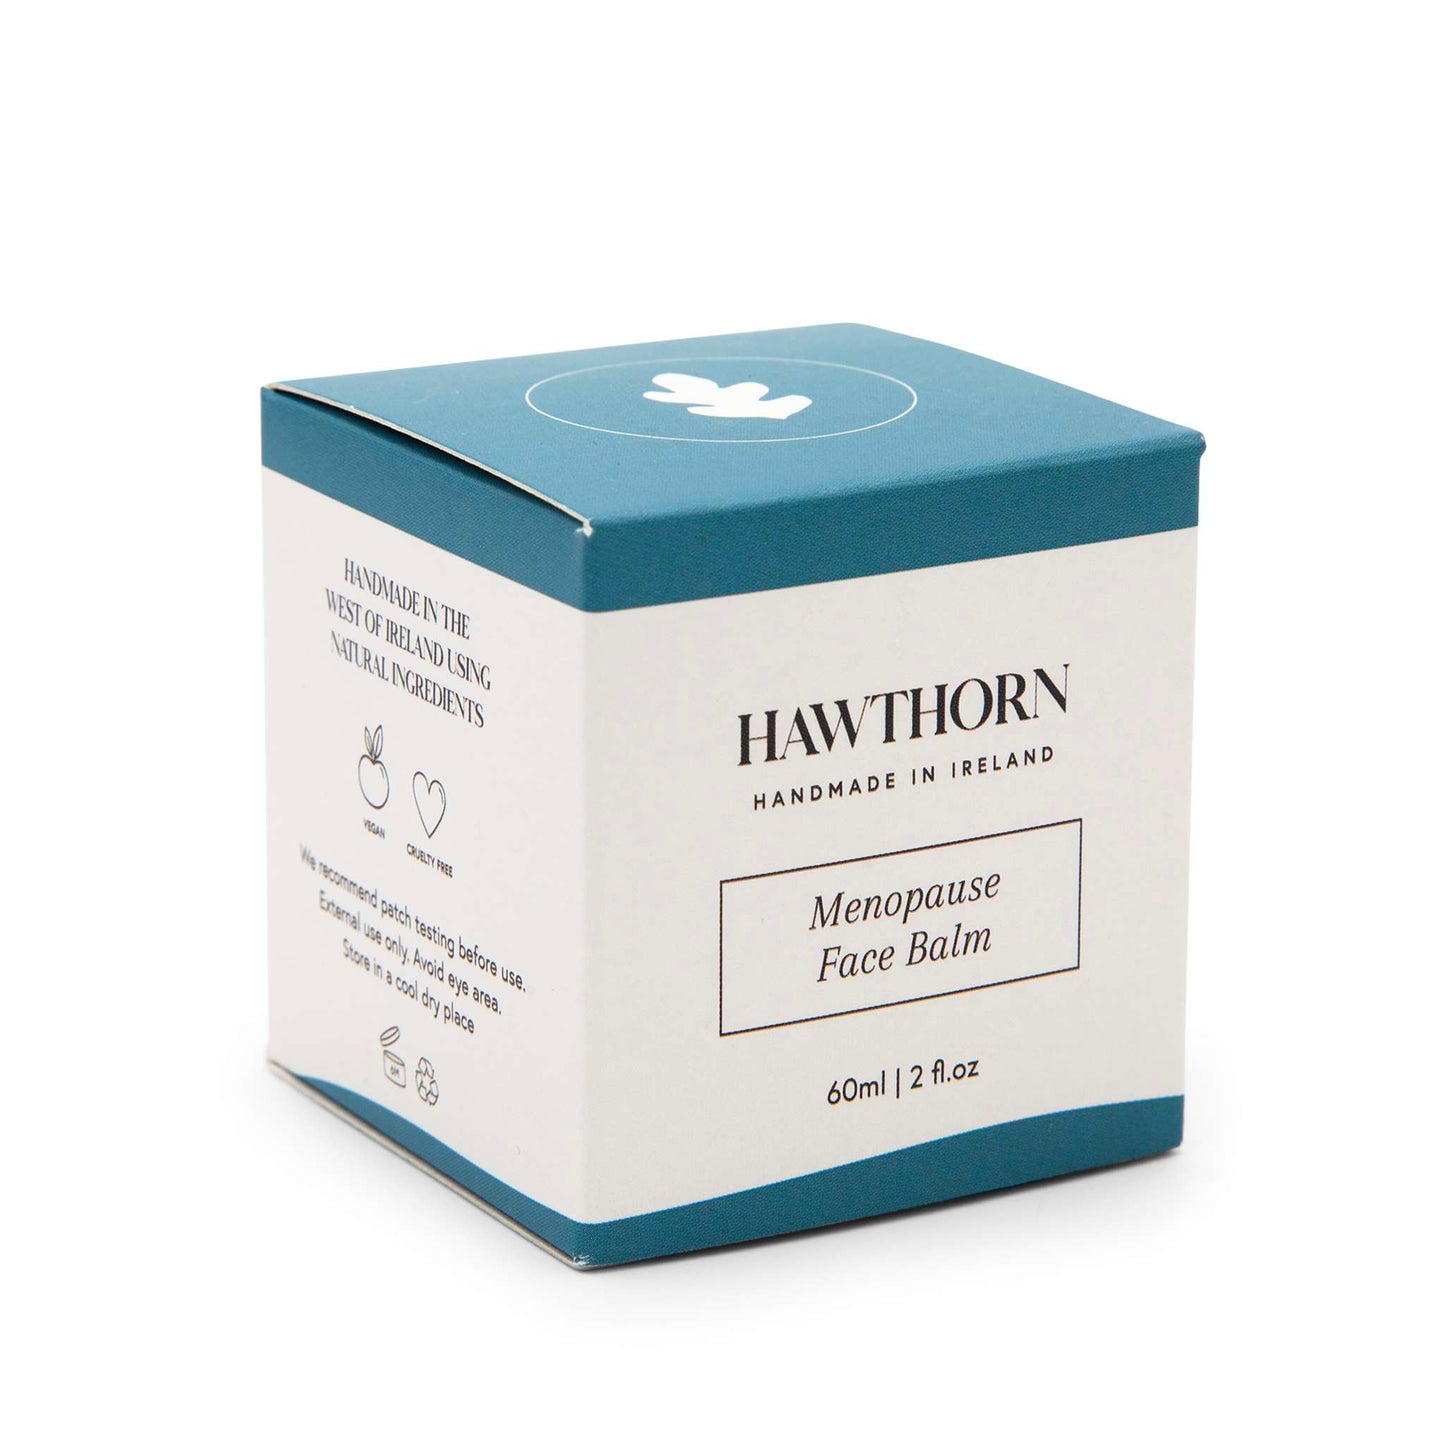 Hawthorn Handmade Skincare Lotion & Moisturizer Menopause Face Balm 60ml - Hawthorn Skincare